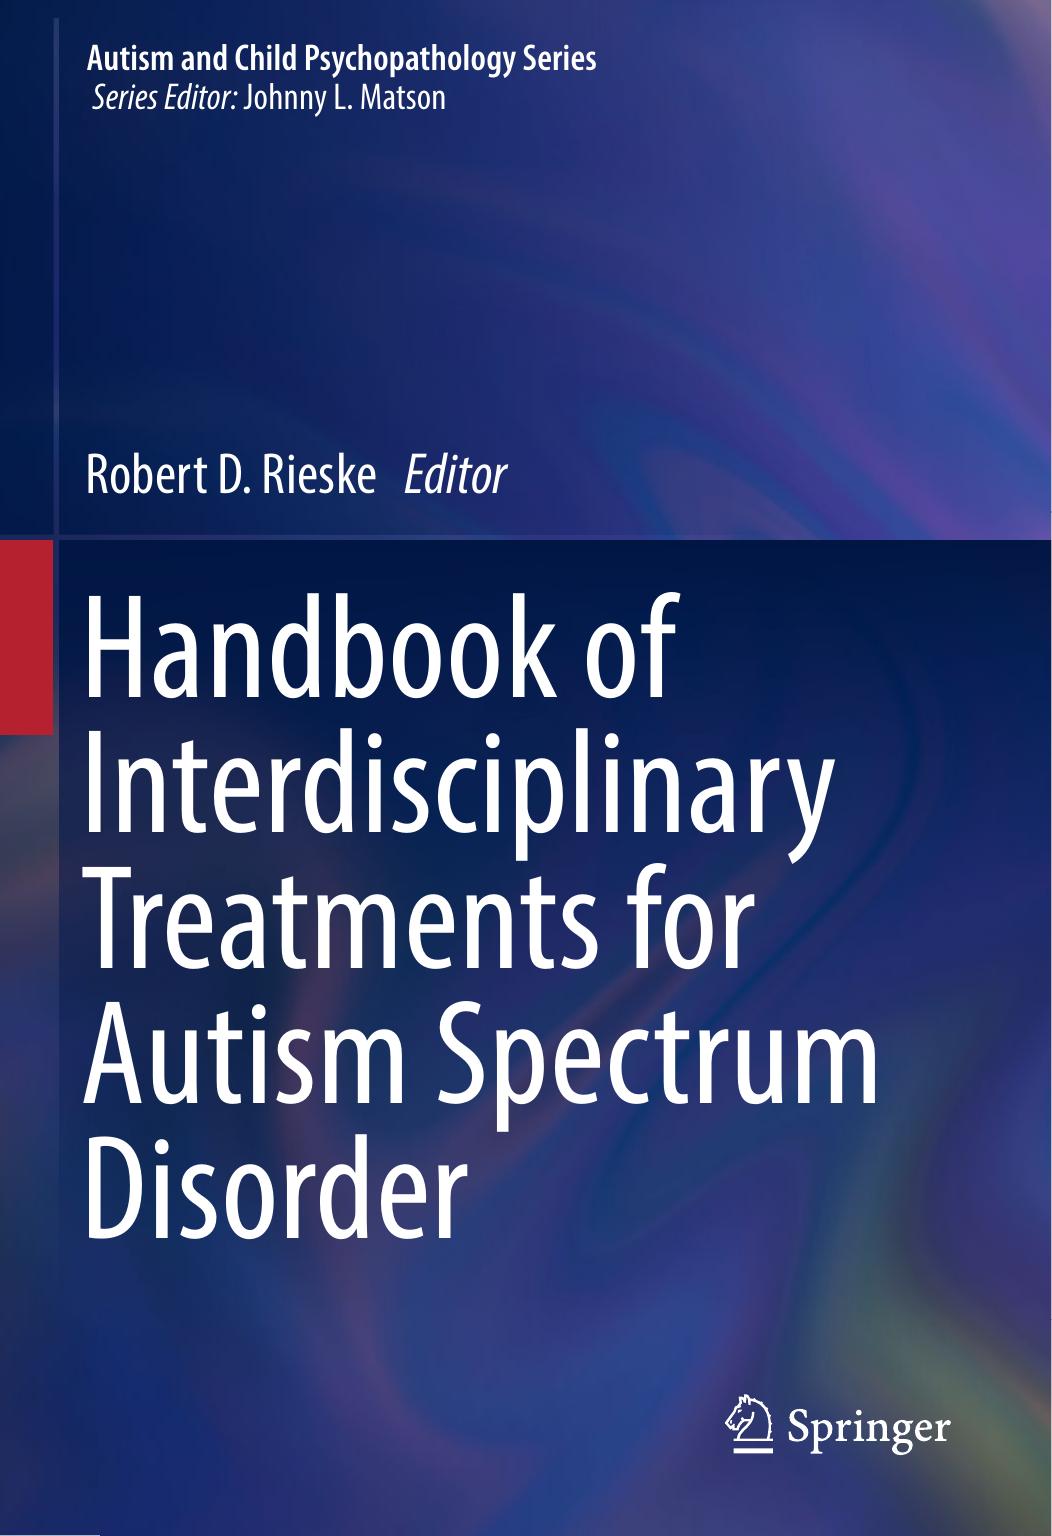 Handbook of Interdisciplinary Treatments for Autism Spectrum Disorder by Robert D. Rieske